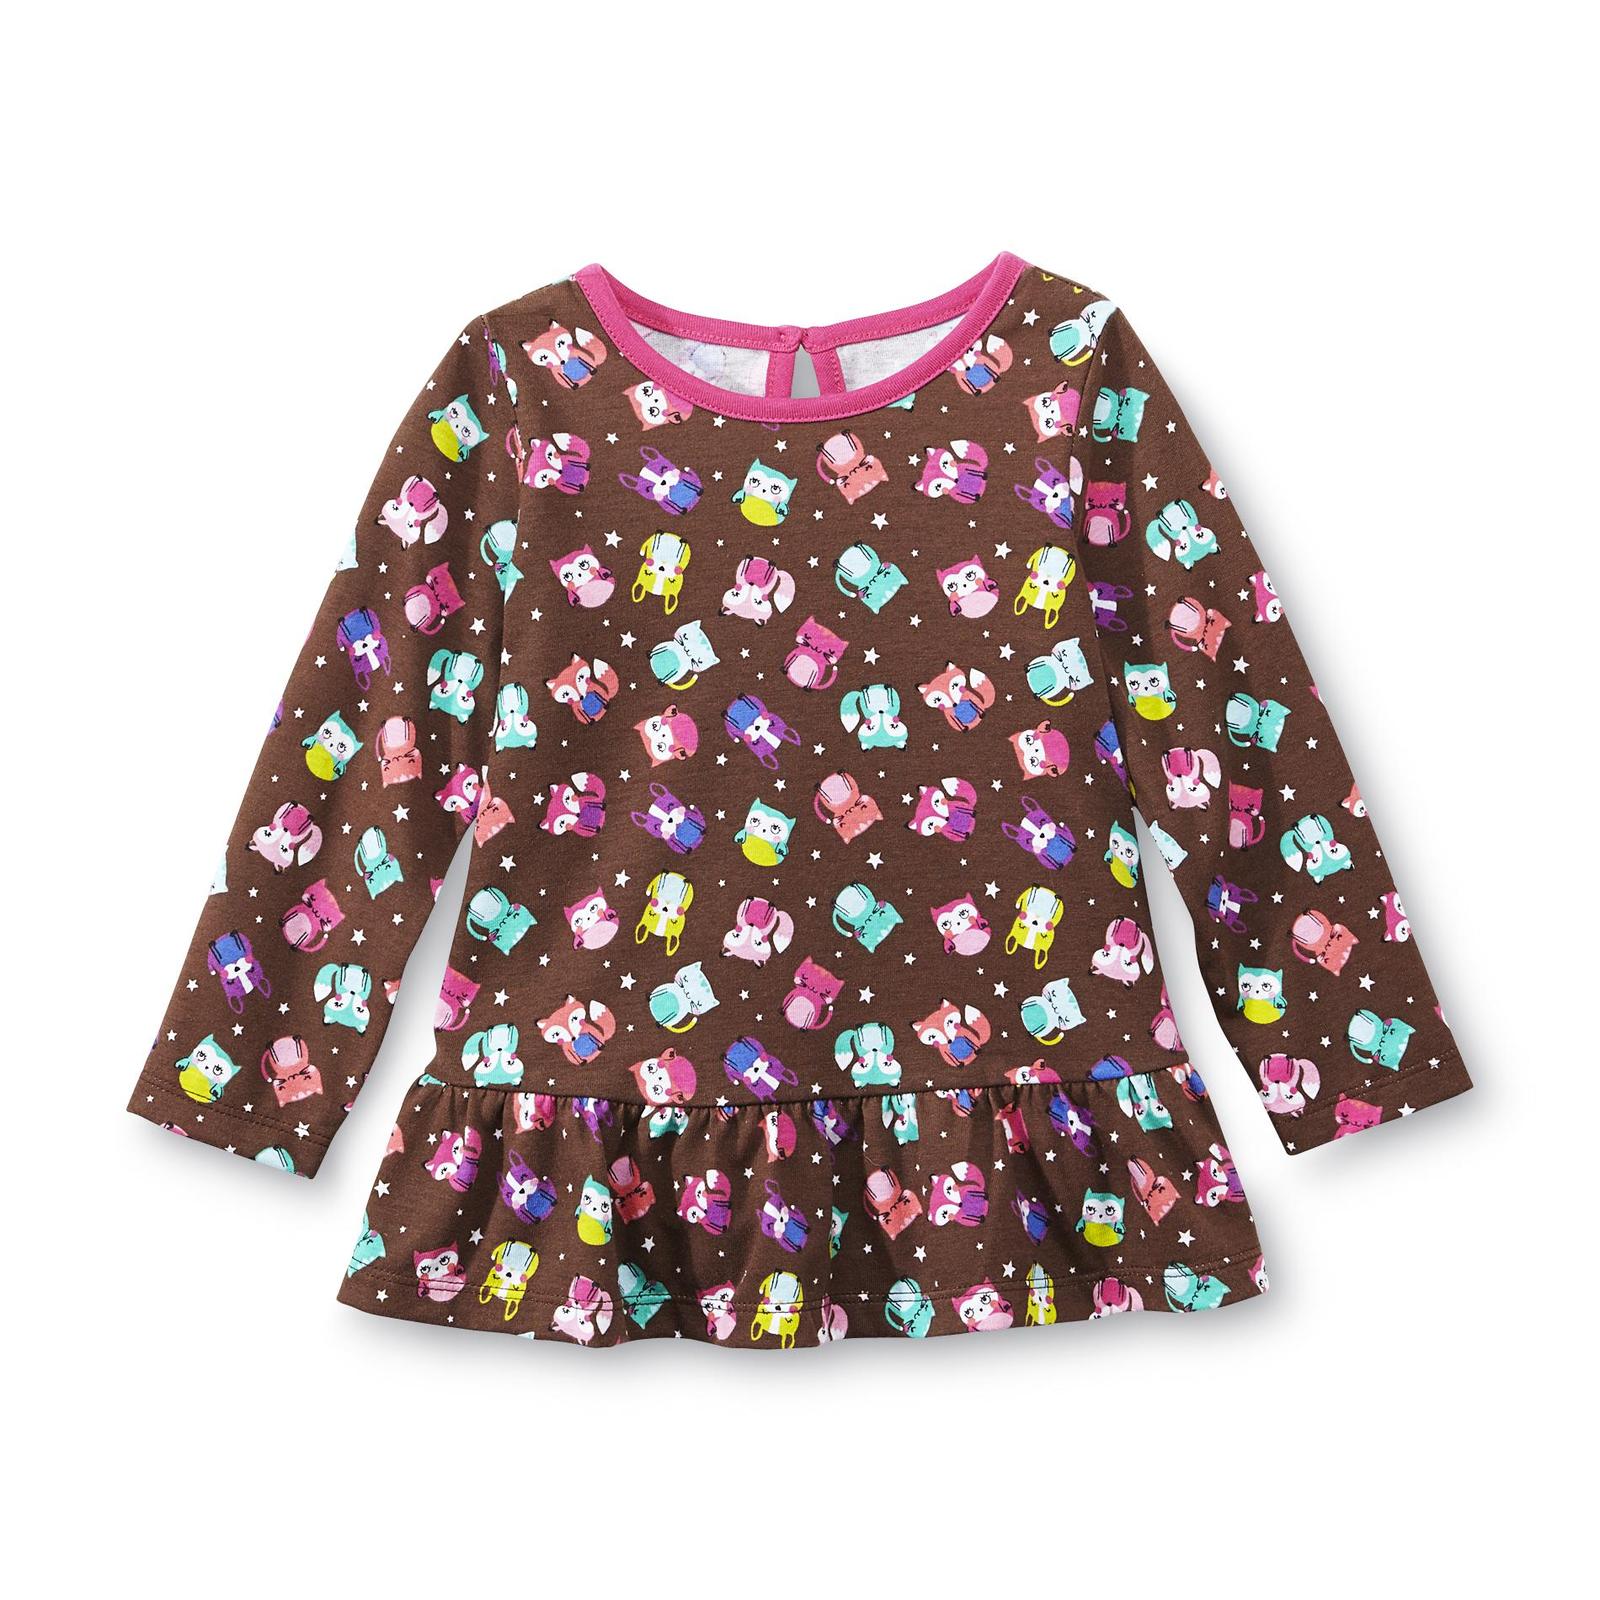 WonderKids Infant & Toddler Girl's Long-Sleeve Peplum Top - Animals